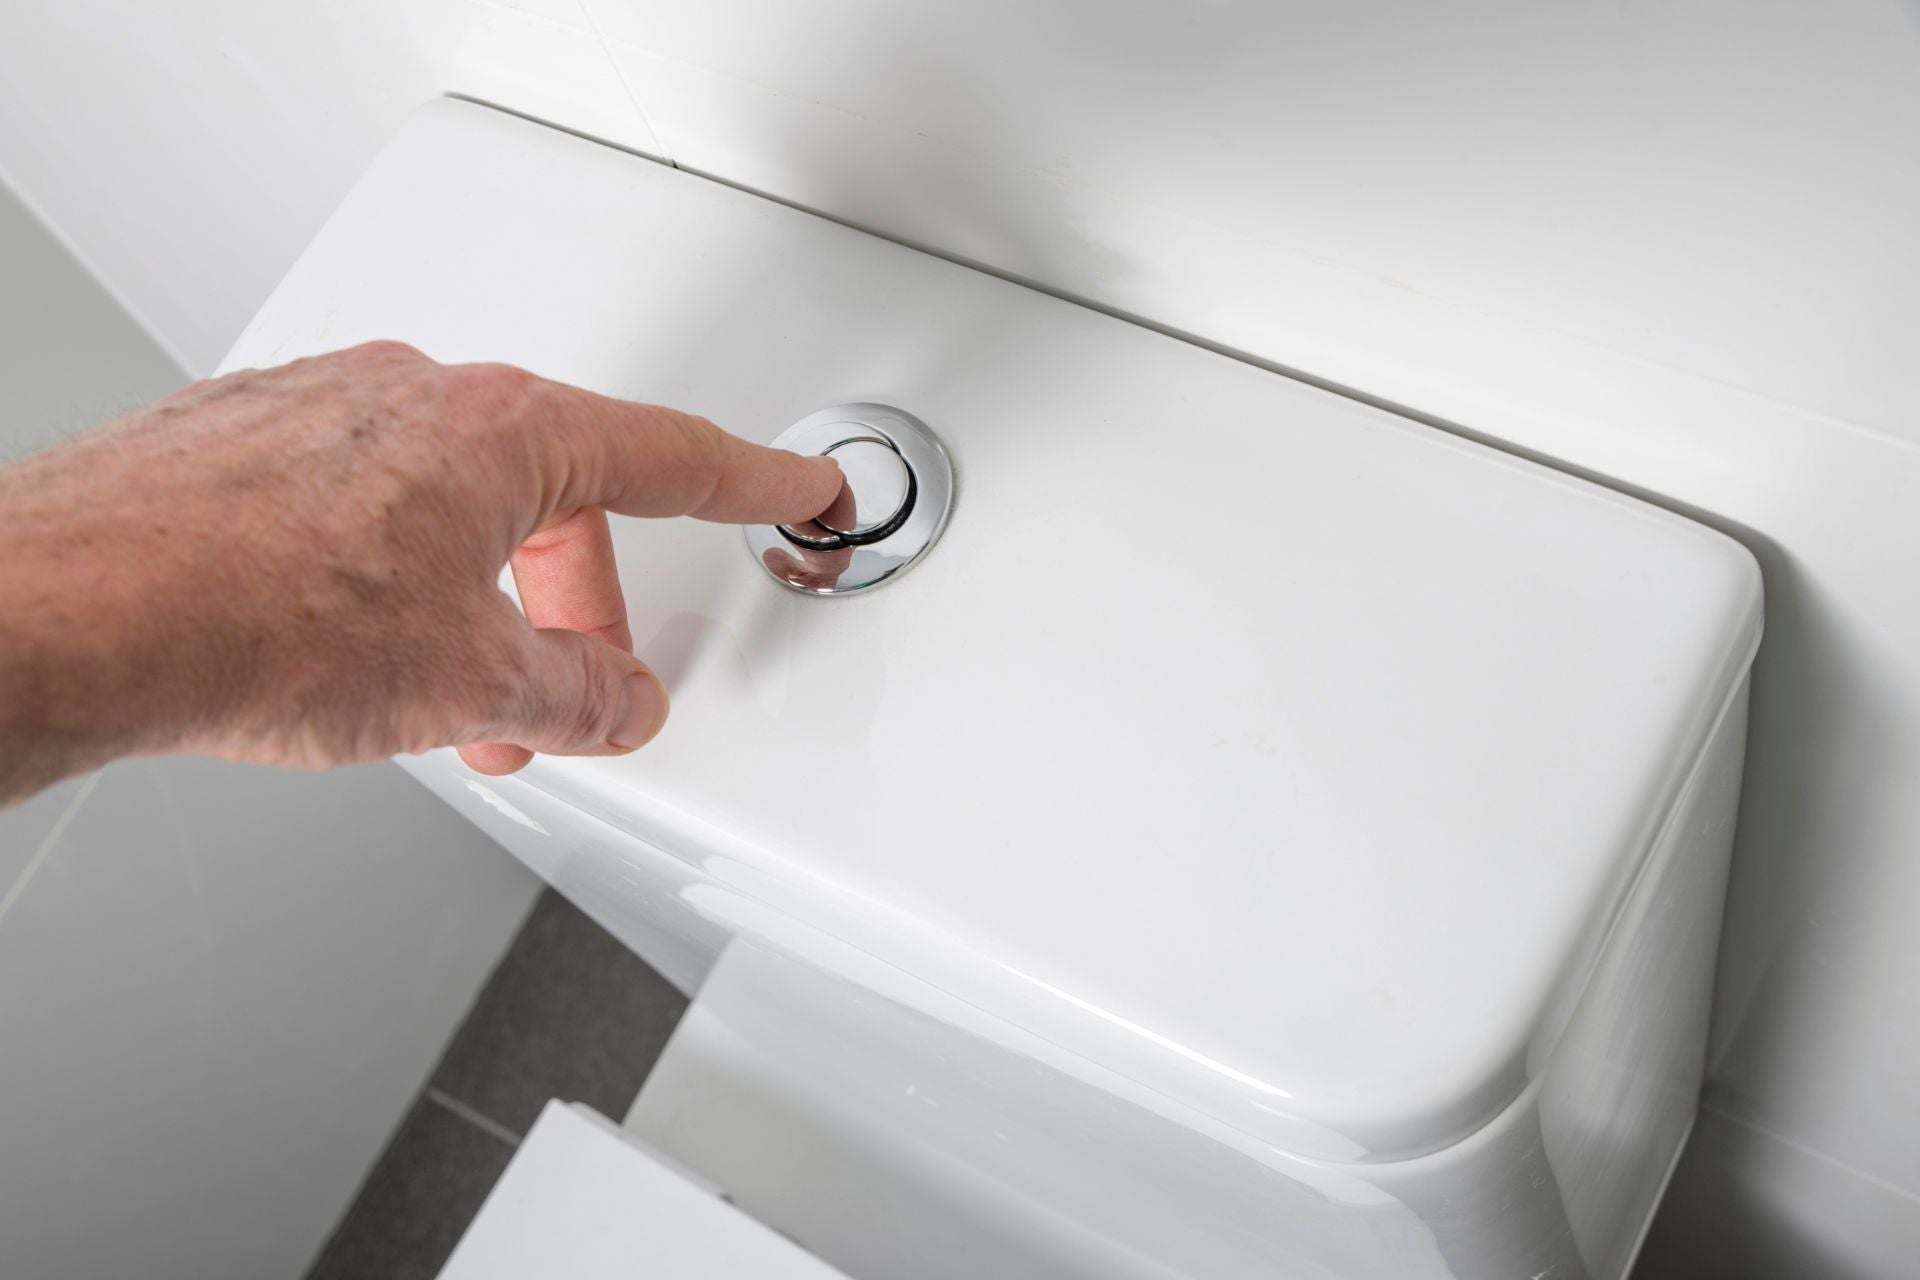 A person pressing down on a toilet tank’s dual flush button